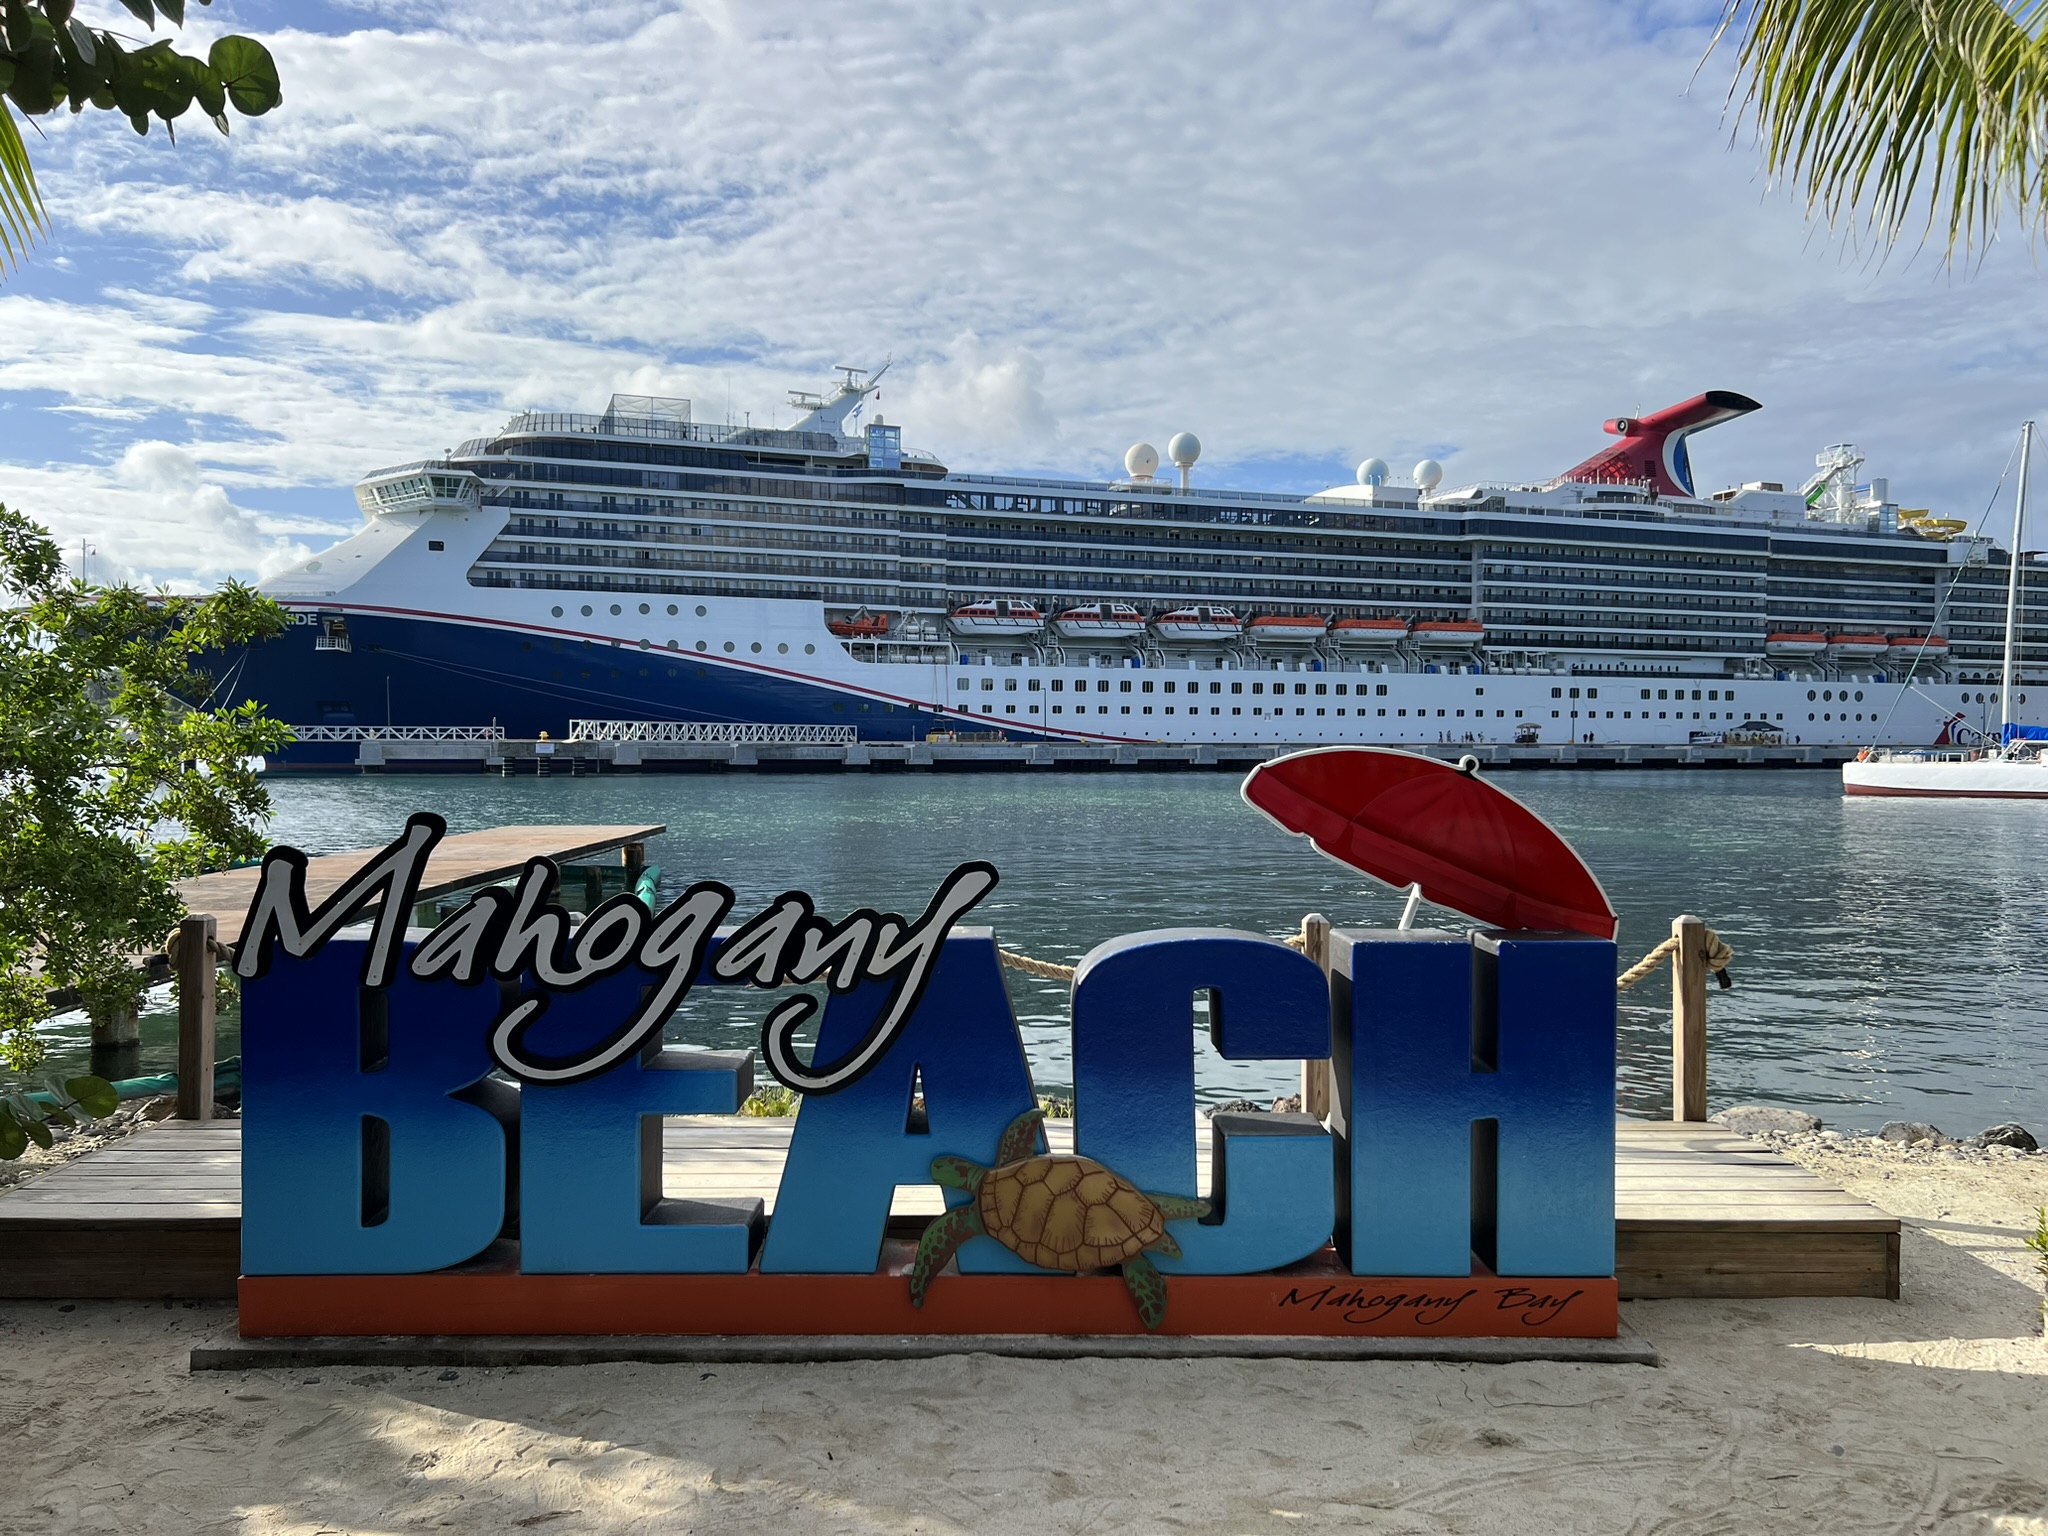 Cruise Ports - Guide to Carnival Cruise Line's Mahogany Bay Cruise Port in Roatan, Honduras